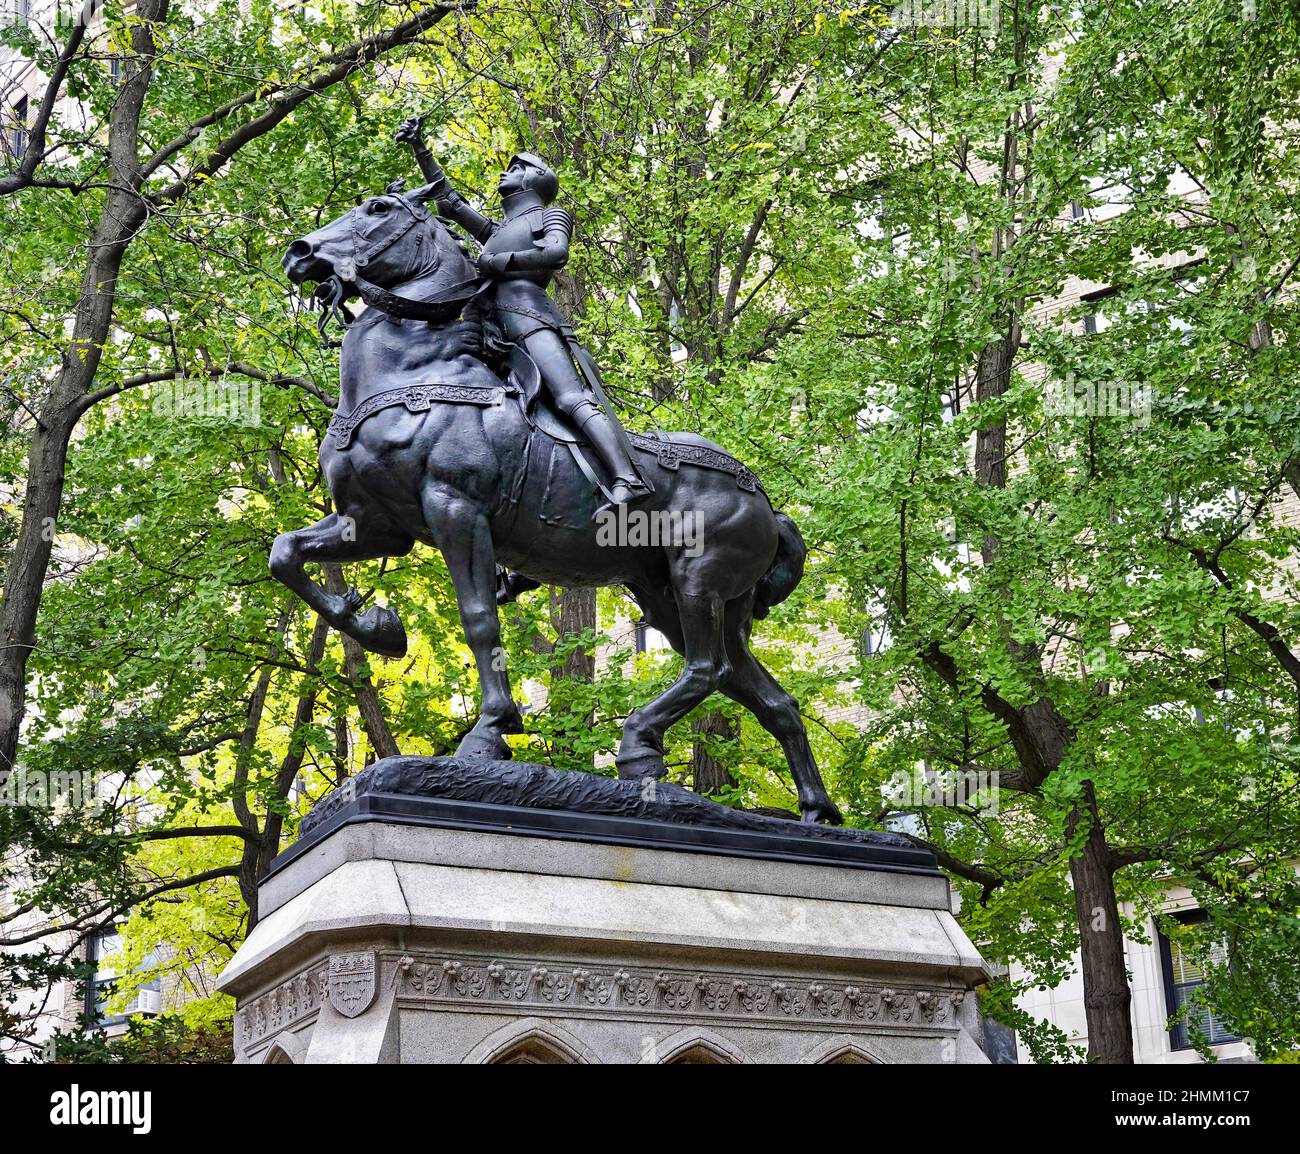 Statue of Joan of Arc in Riverside Park, New York, sculpted in 1915 by Anna Hyatt Huntington Stock Photo